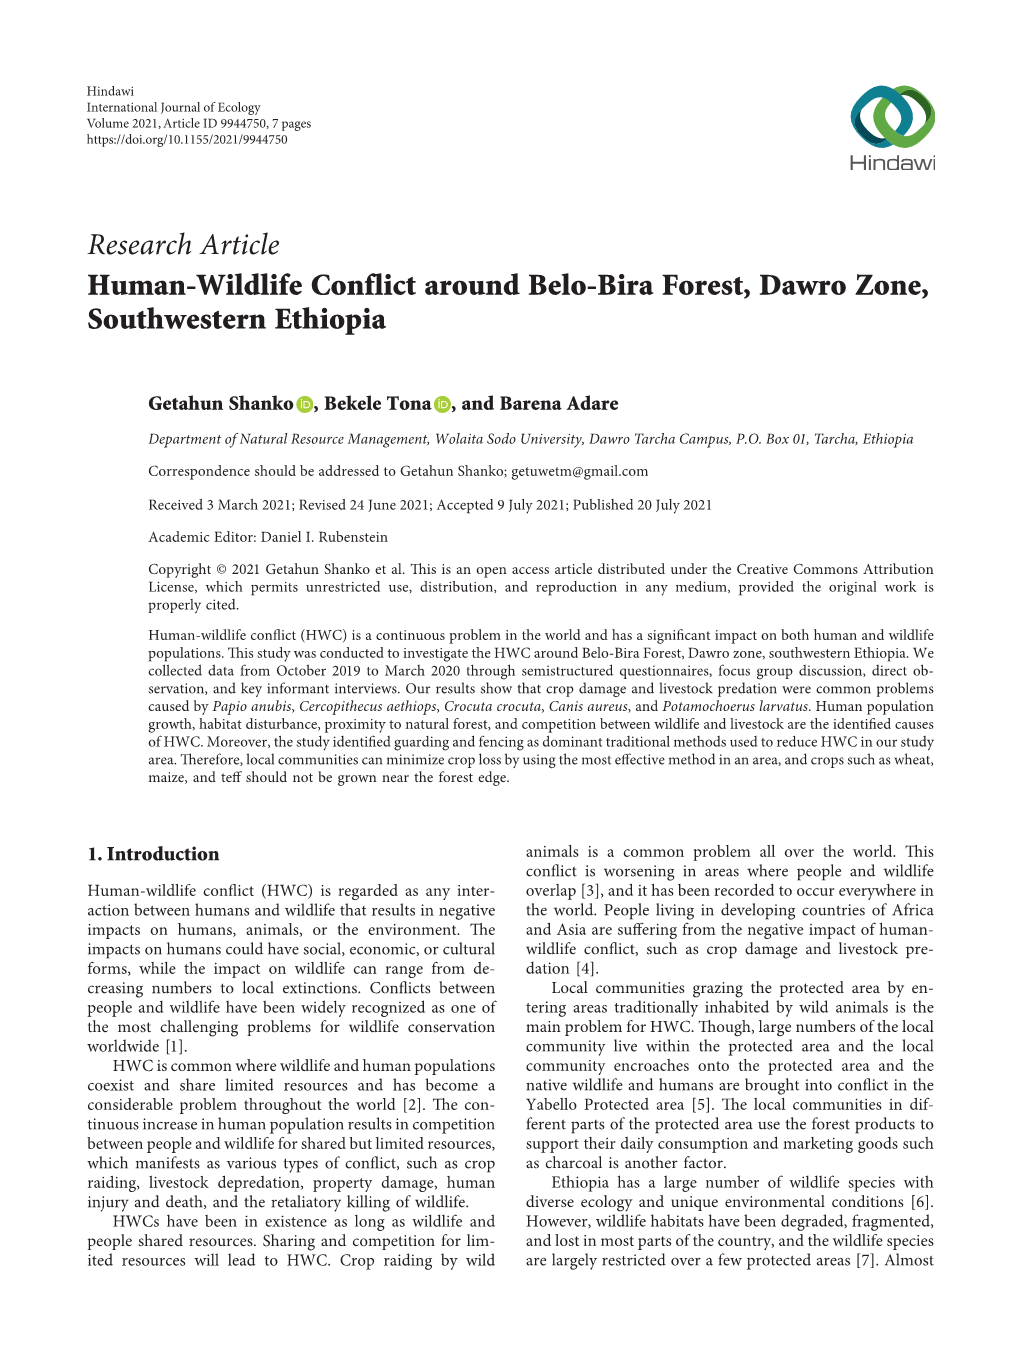 Research Article Human-Wildlife Conflict Around Belo-Bira Forest, Dawro Zone, Southwestern Ethiopia